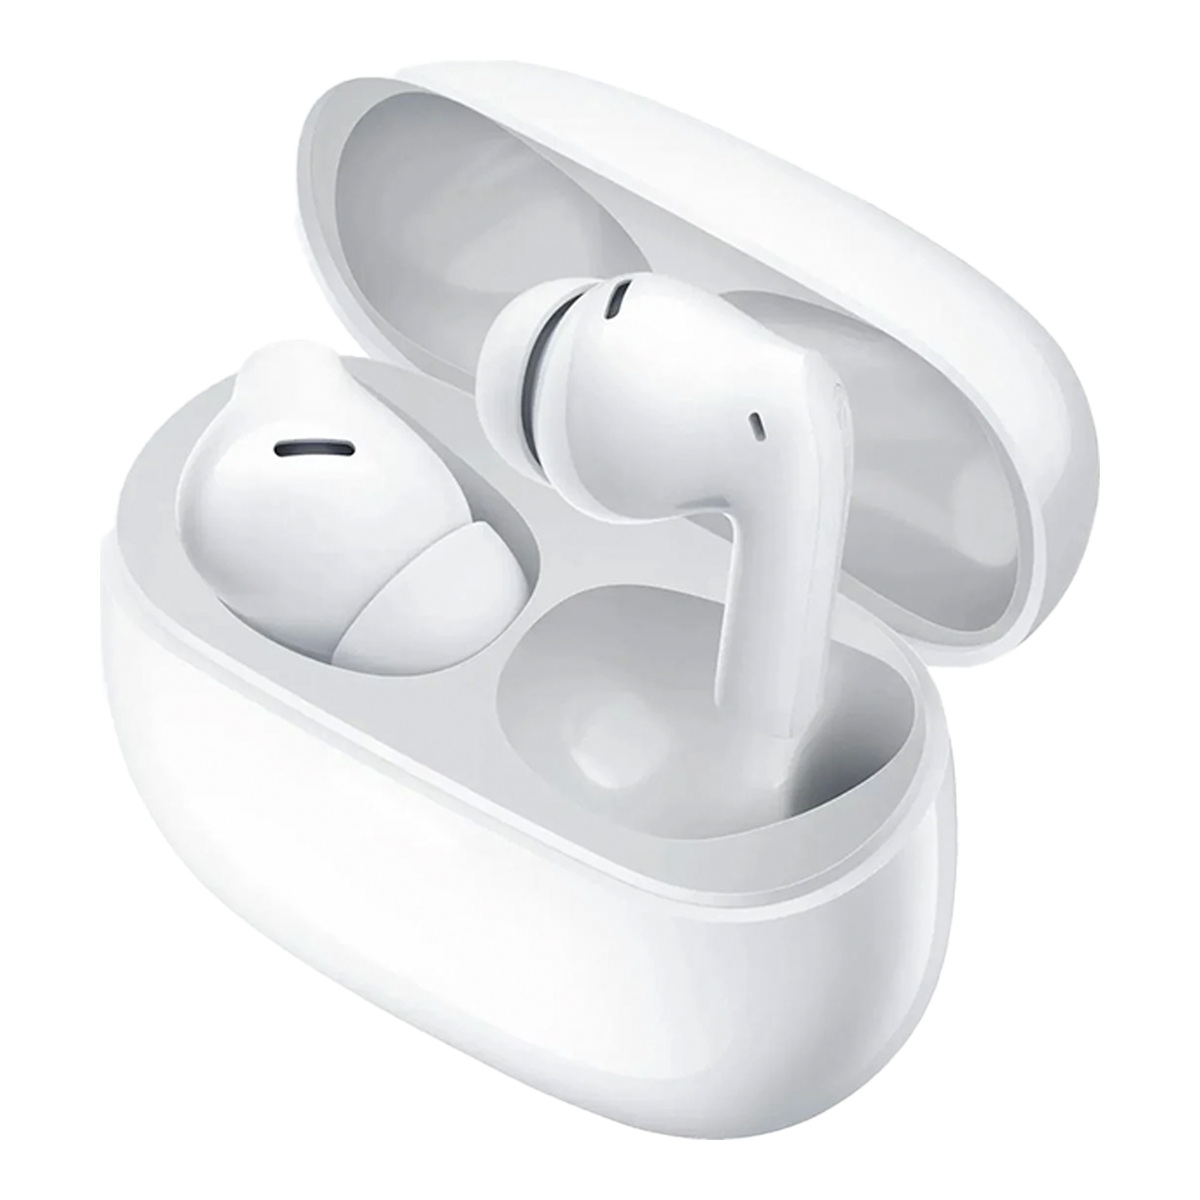 Mi TWS Earbuds 5 Pro with Mic, White, BHR7662GL